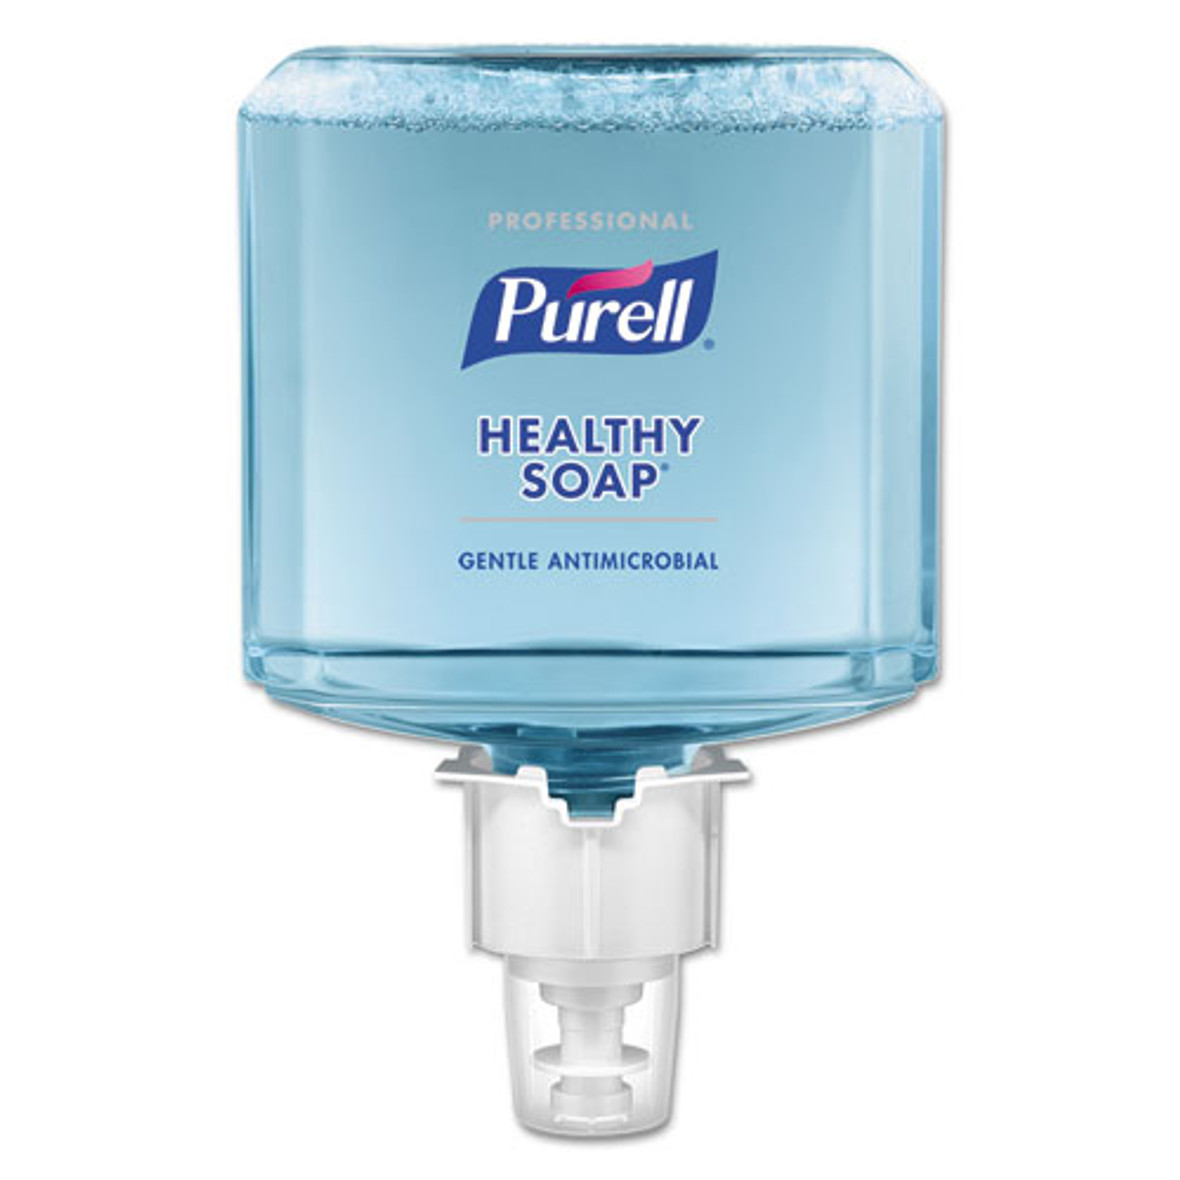 PURELL® Professional HEALTHY SOAP 0.5% BAK Antimicrobial Foam, For ES4 Dispensers